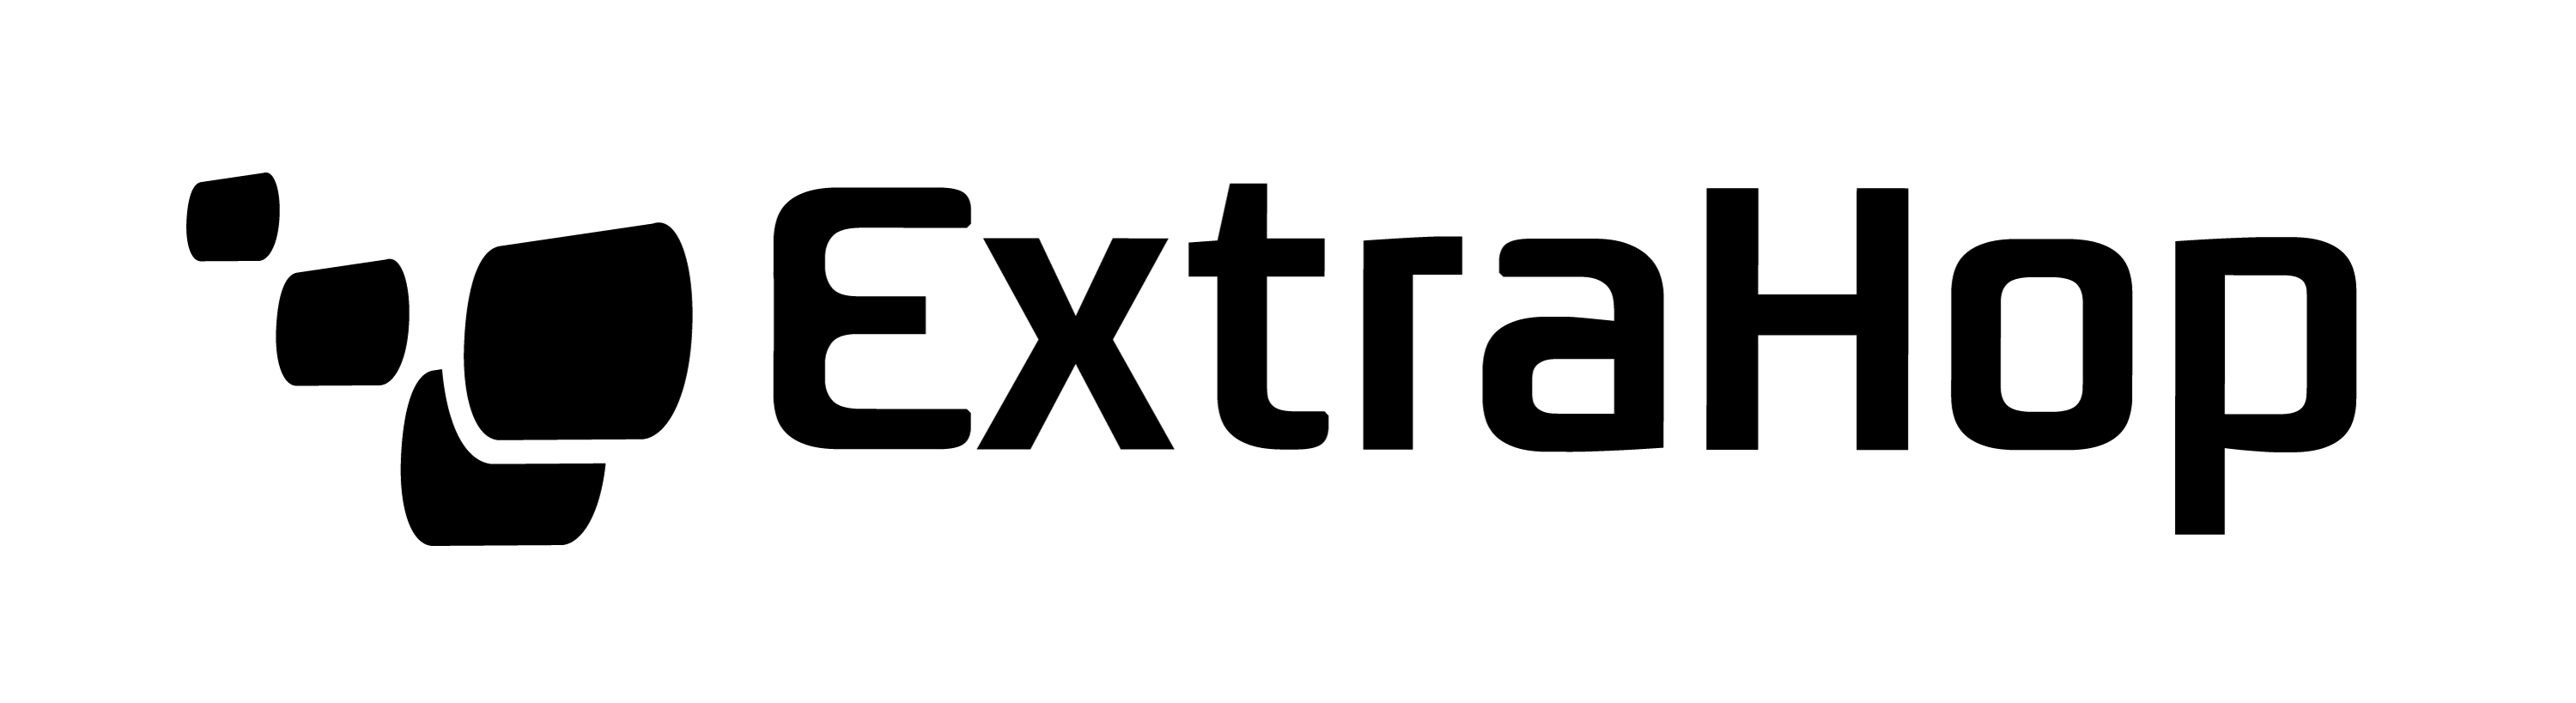 ExtraHop Networks logo